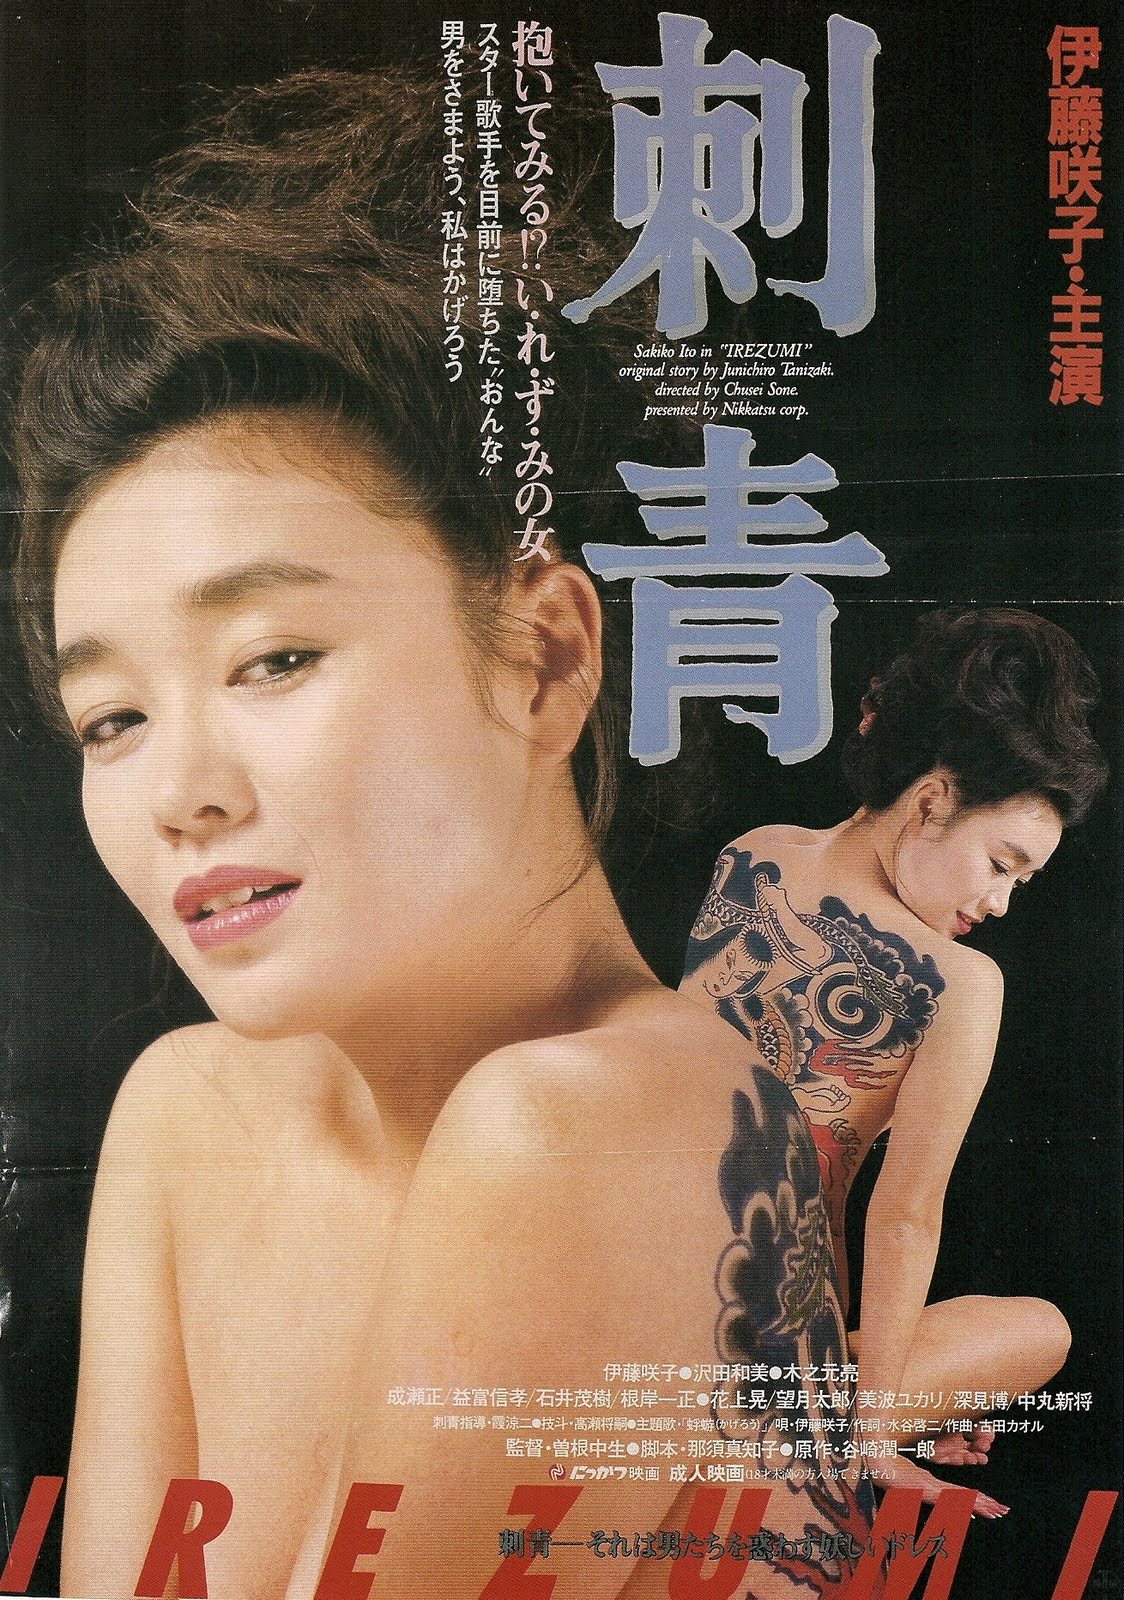 Tattoo (1984) Screenshot 1 